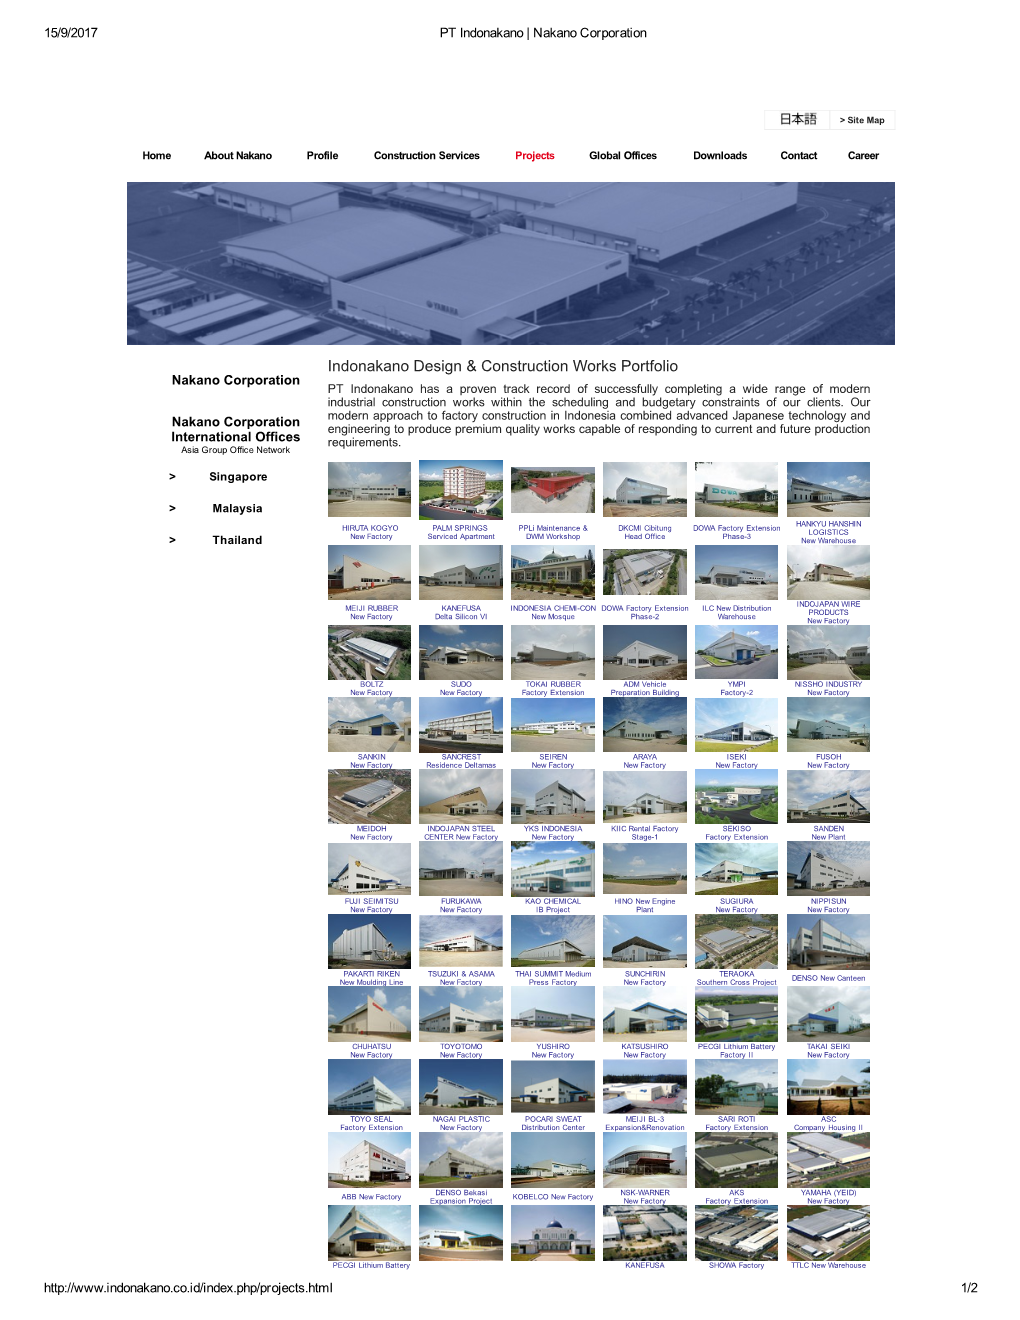 Indonakano Design & Construction Works Portfolio